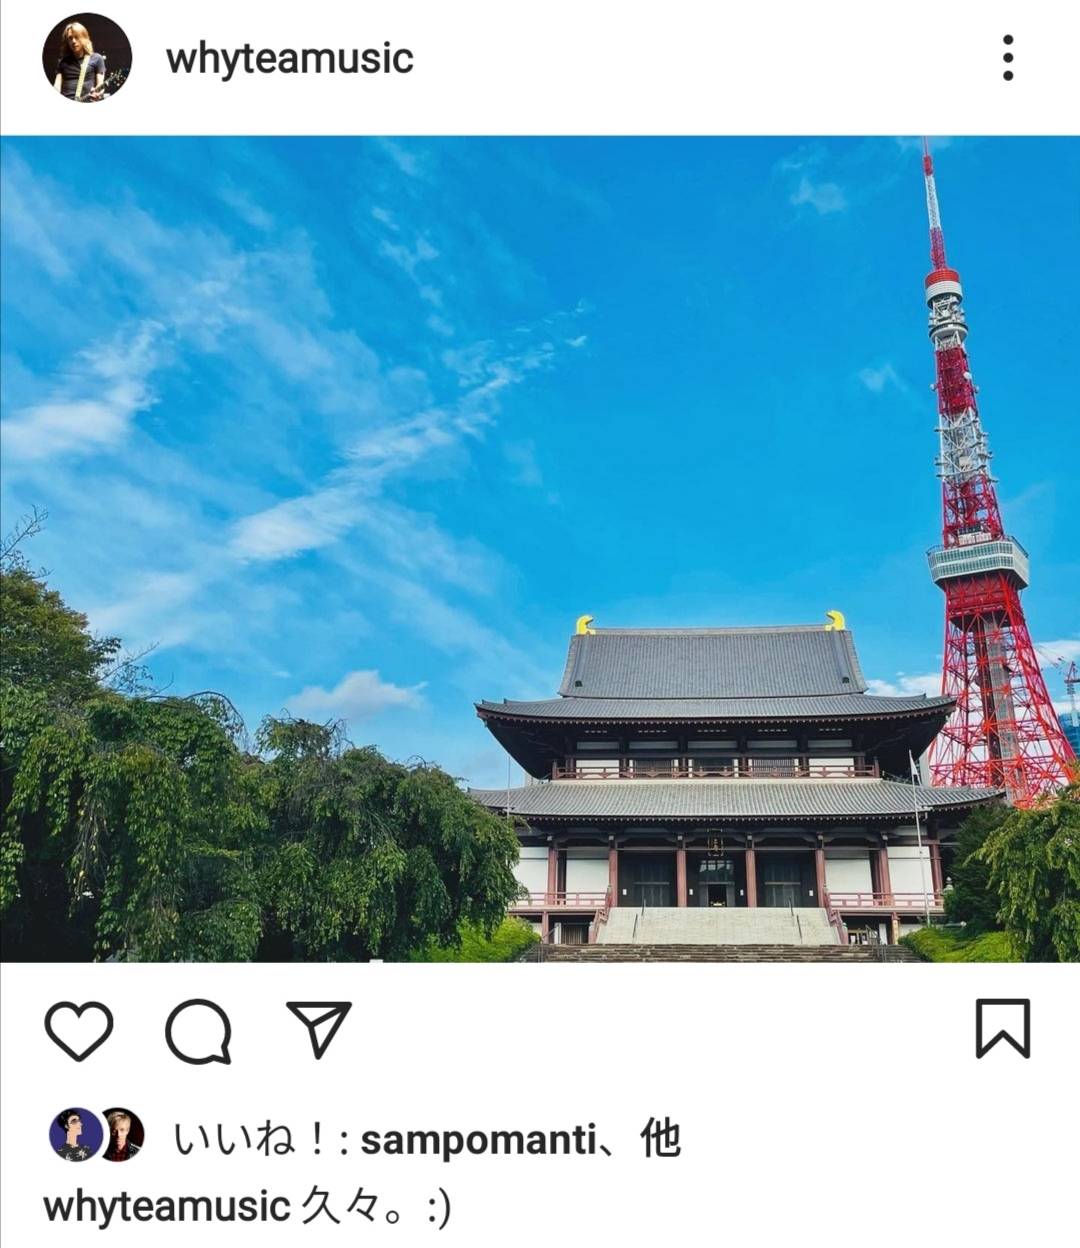 B'zのサポートメンバー・Yukihide "YT" TakiyamaがInstagramに投稿した増上寺と東京タワーの写真